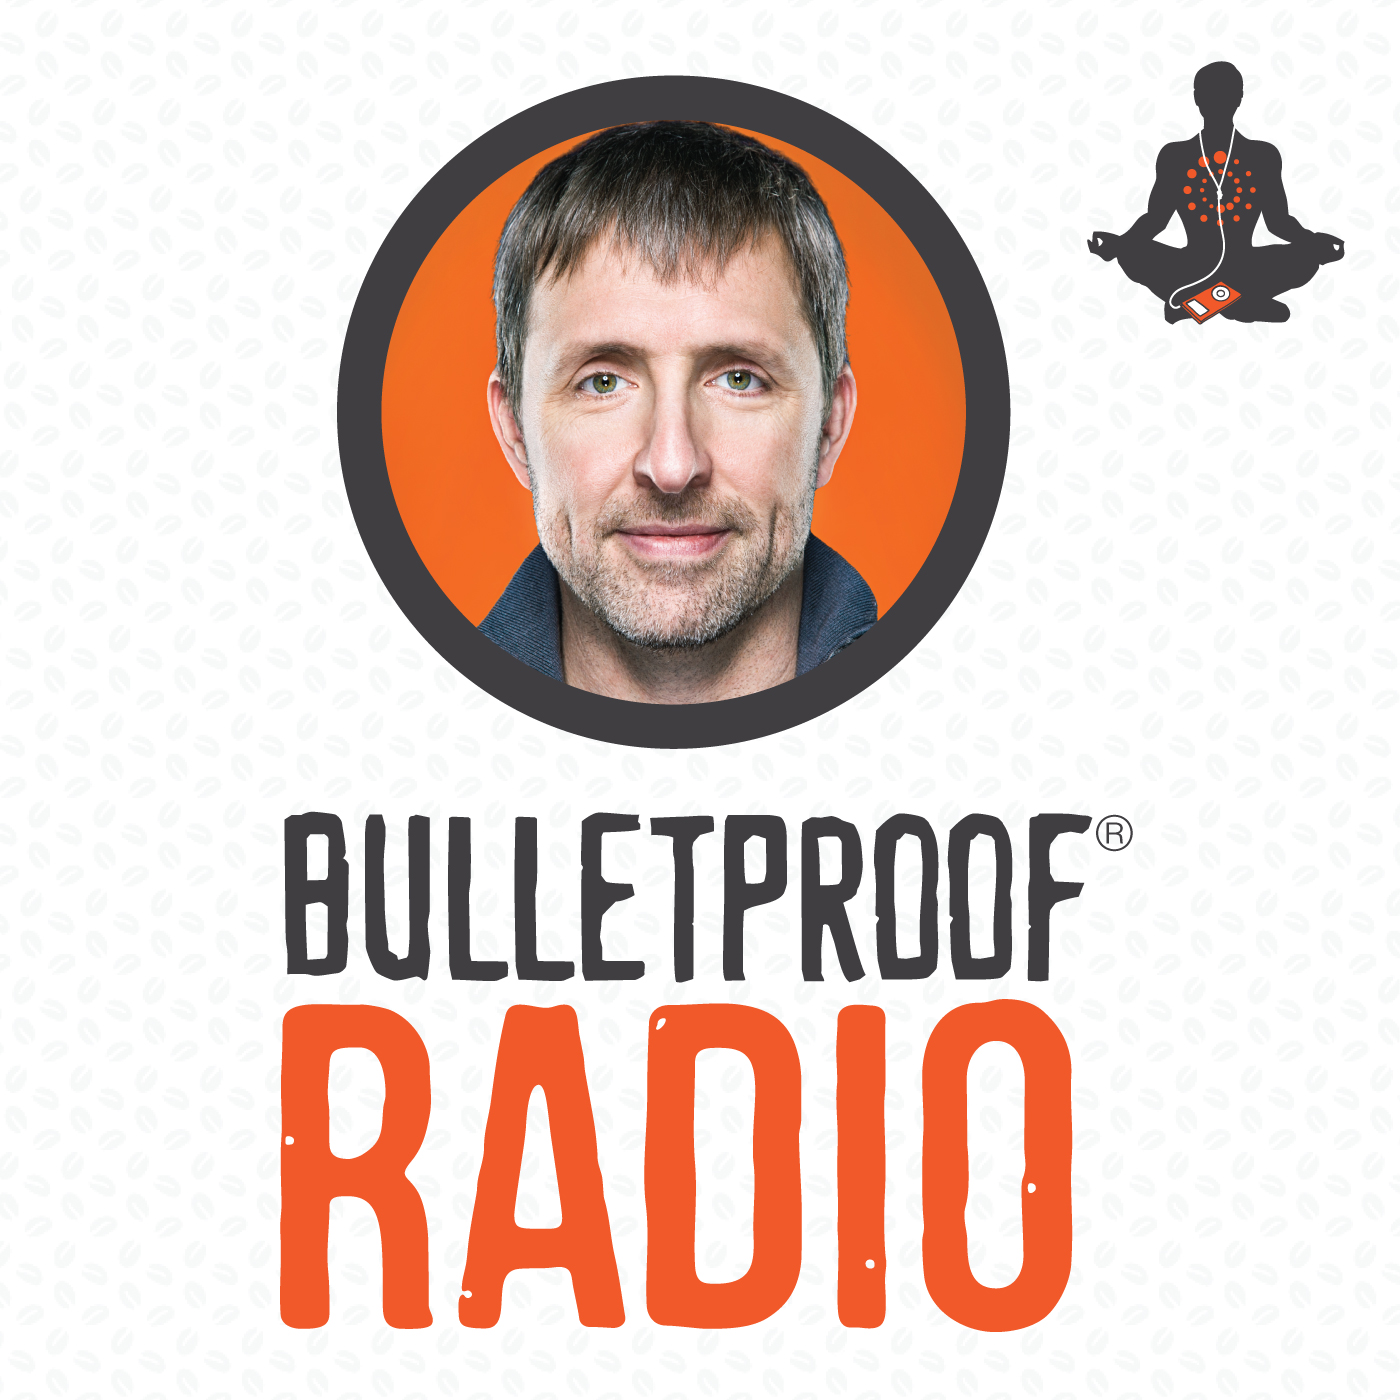 Bulletproof-Radio Podcast Logo